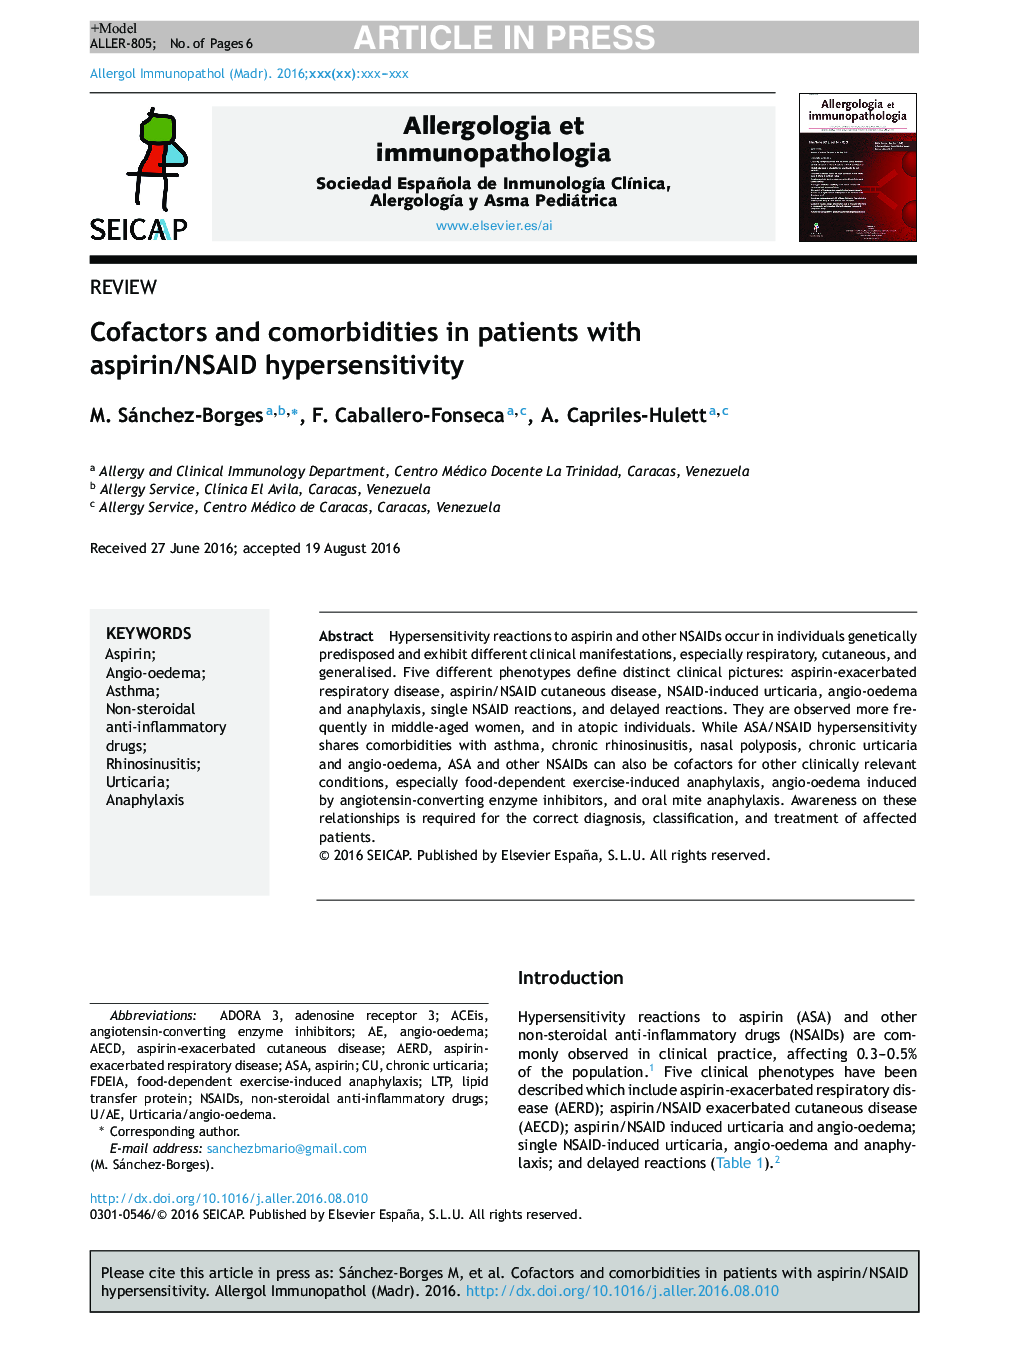 Cofactors and comorbidities in patients with aspirin/NSAID hypersensitivity